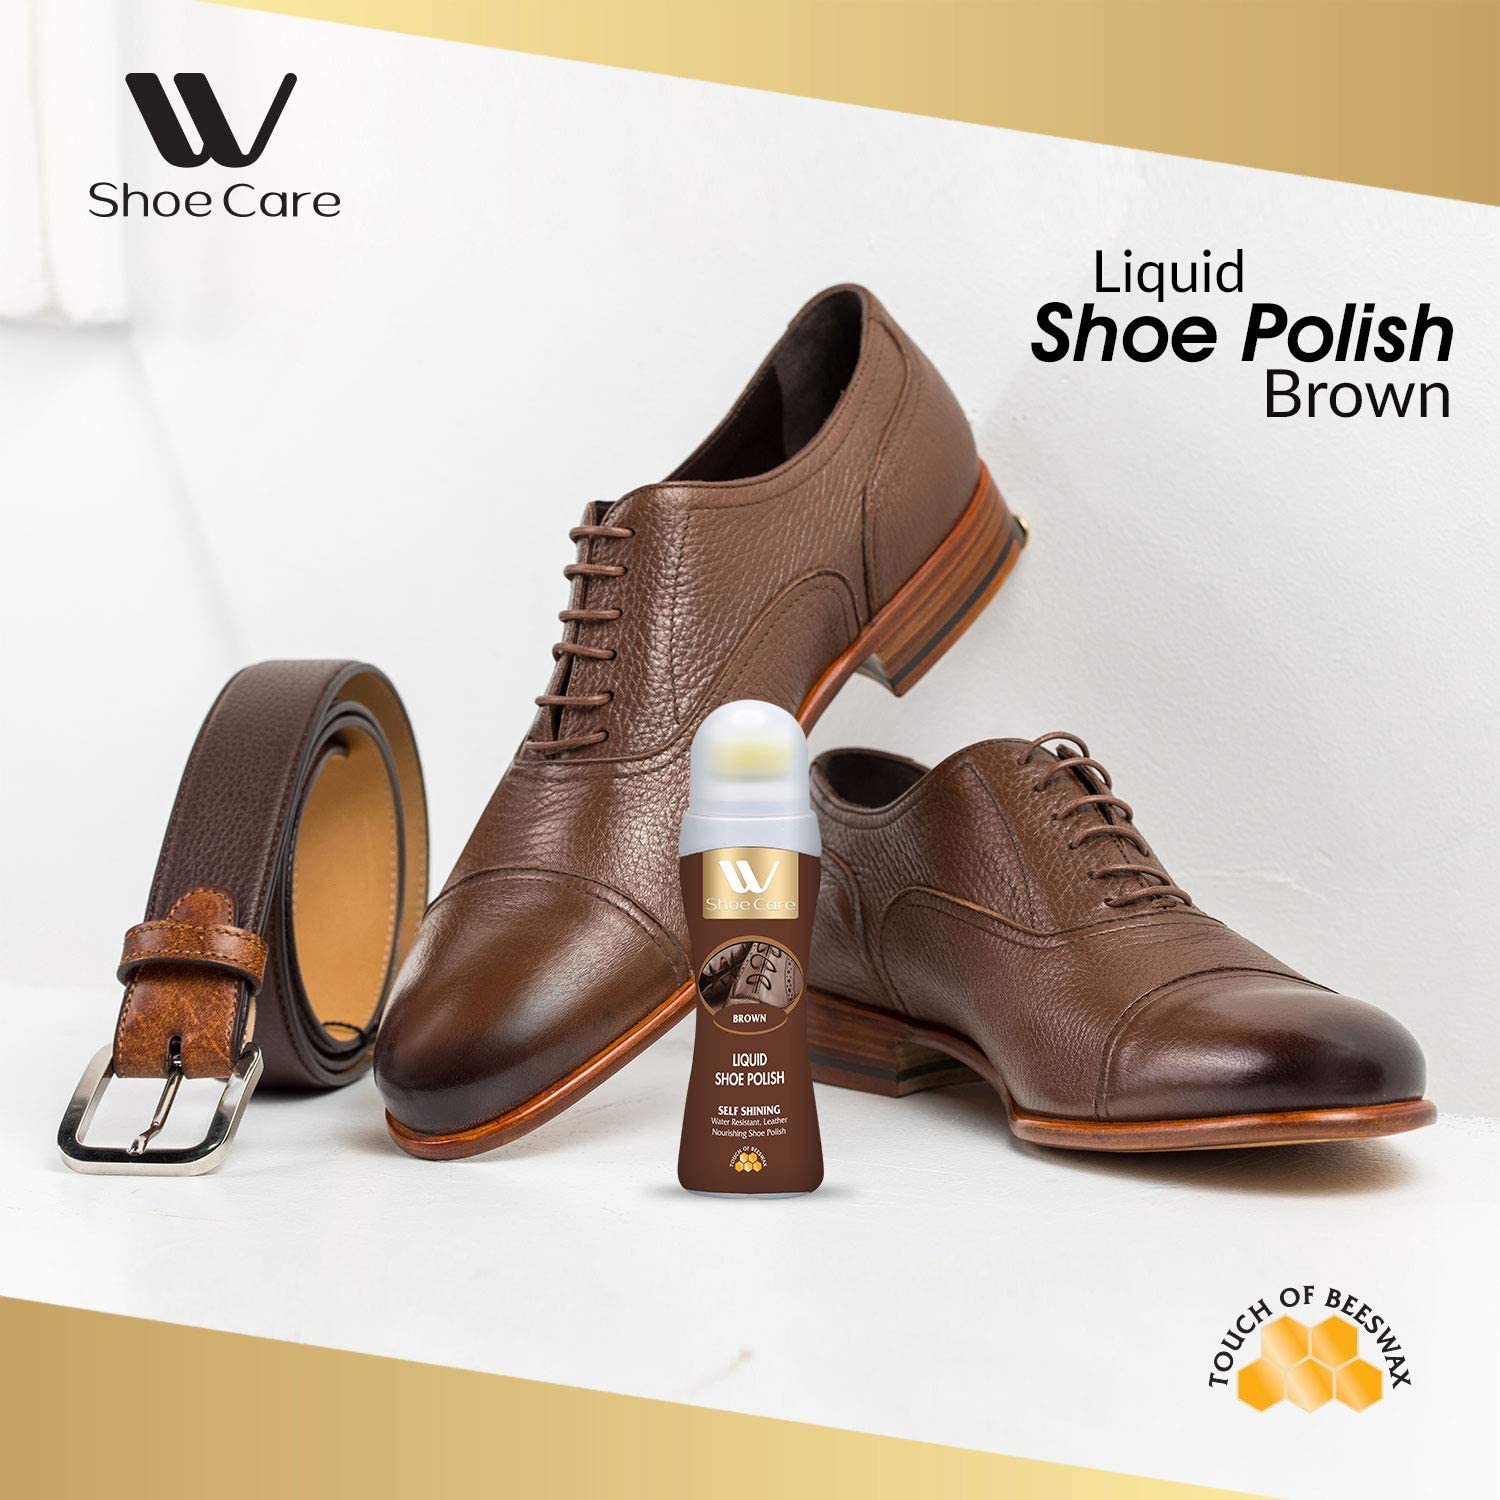 WBM Shoe Polish - Brown Leather Nourshing & Water Repellent Shoe